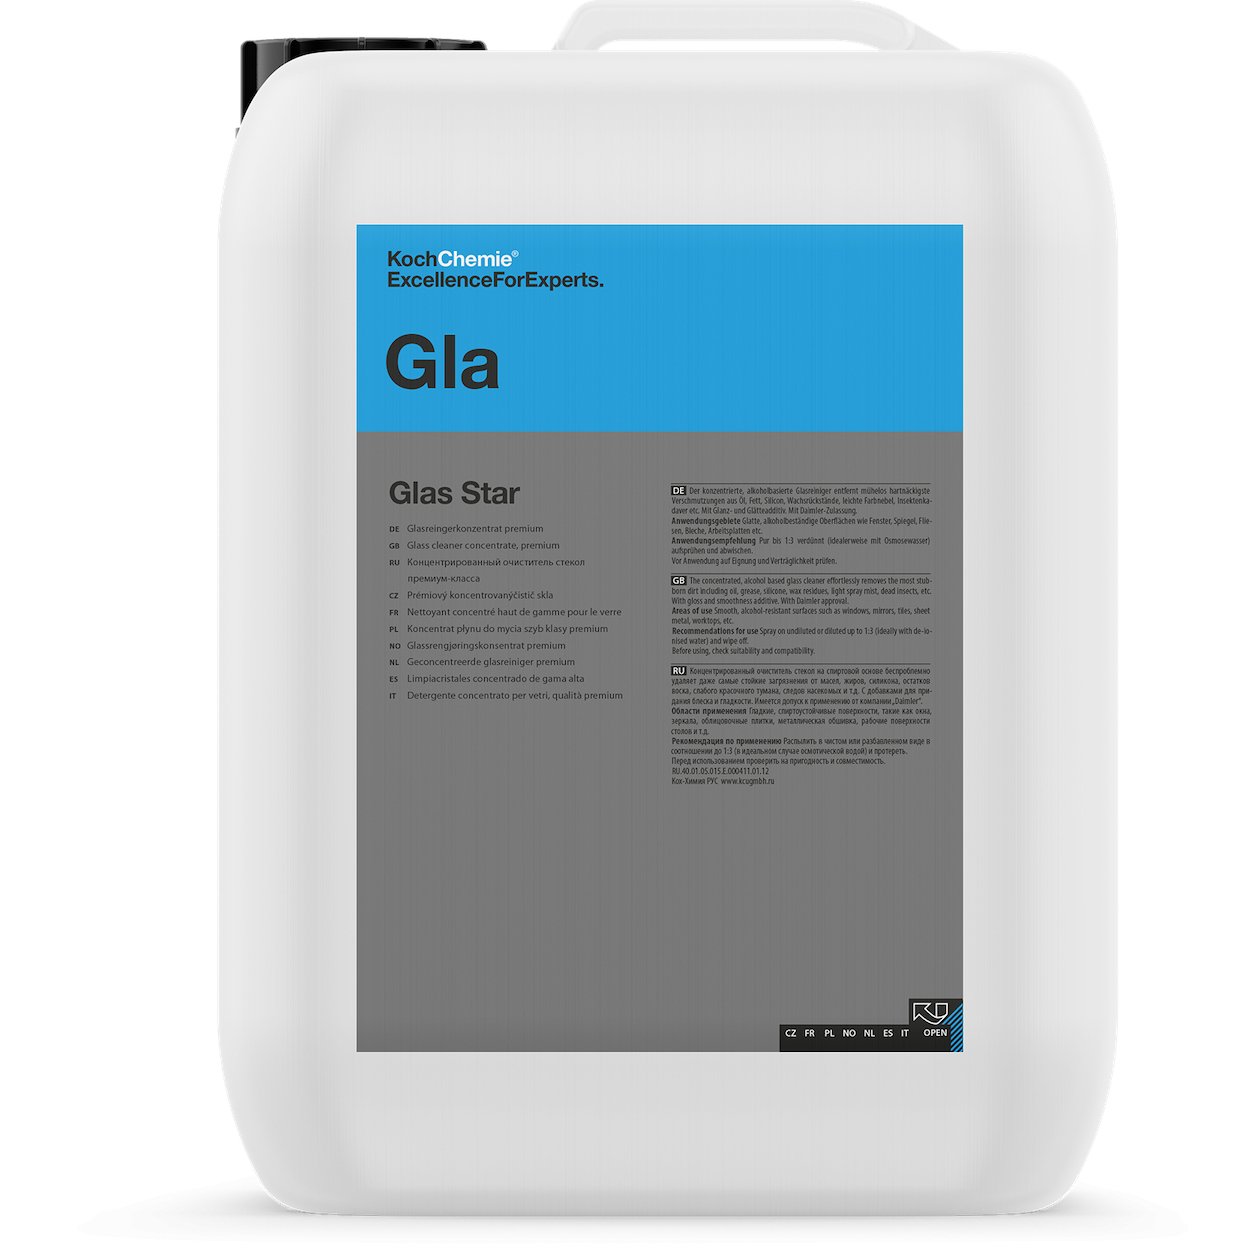 Glasreinigerkonzentrat | Glas Star Gla | 10 Liter | Koch Chemie - fivestartoolshop.com